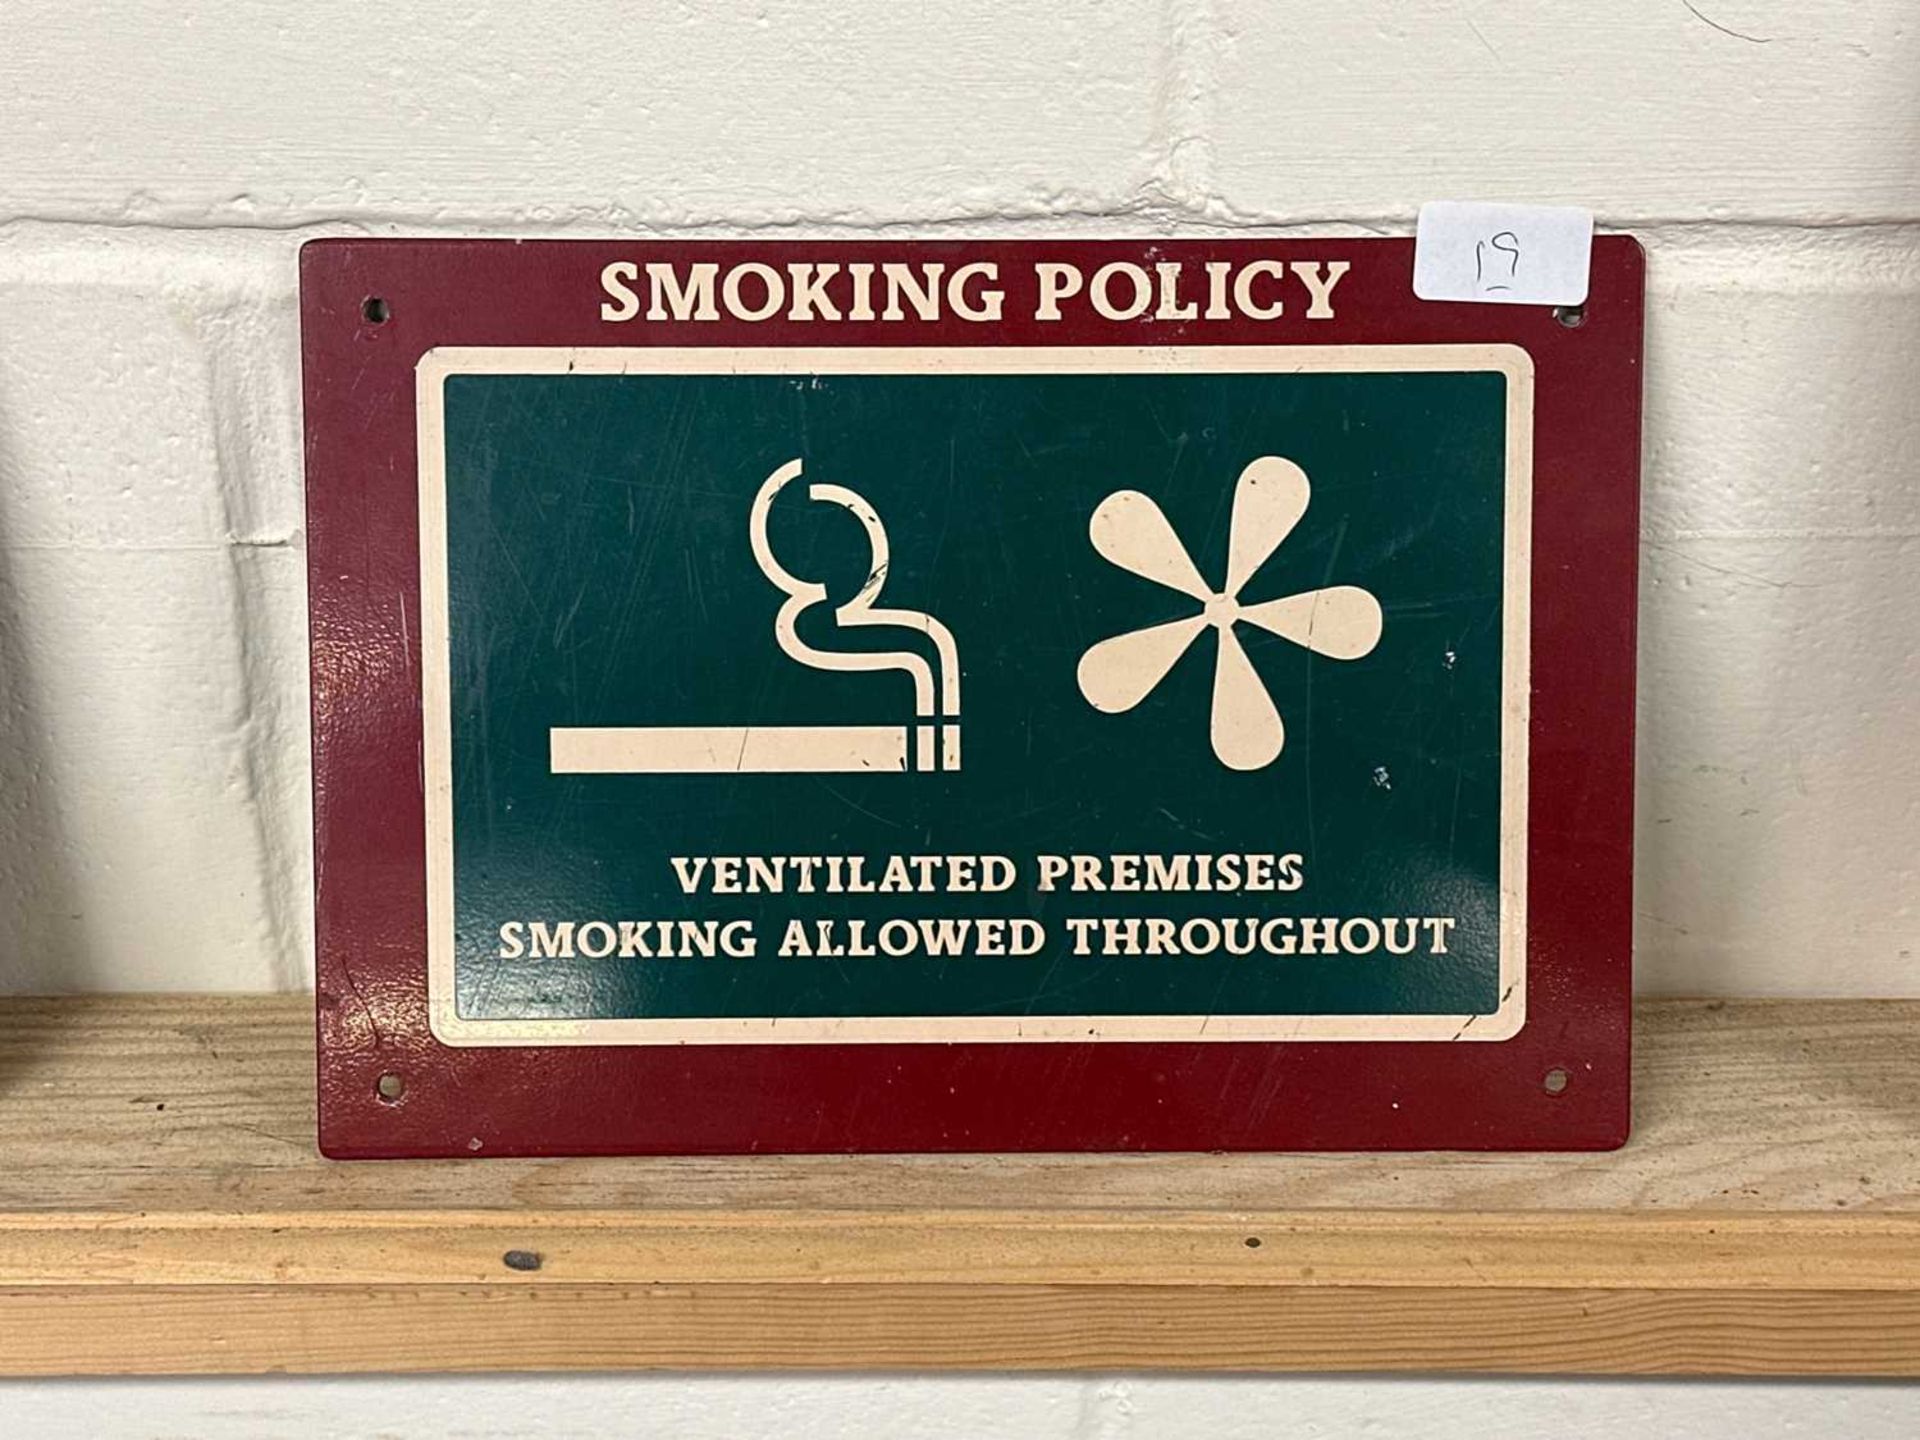 A metal "Smoking Policy" sign